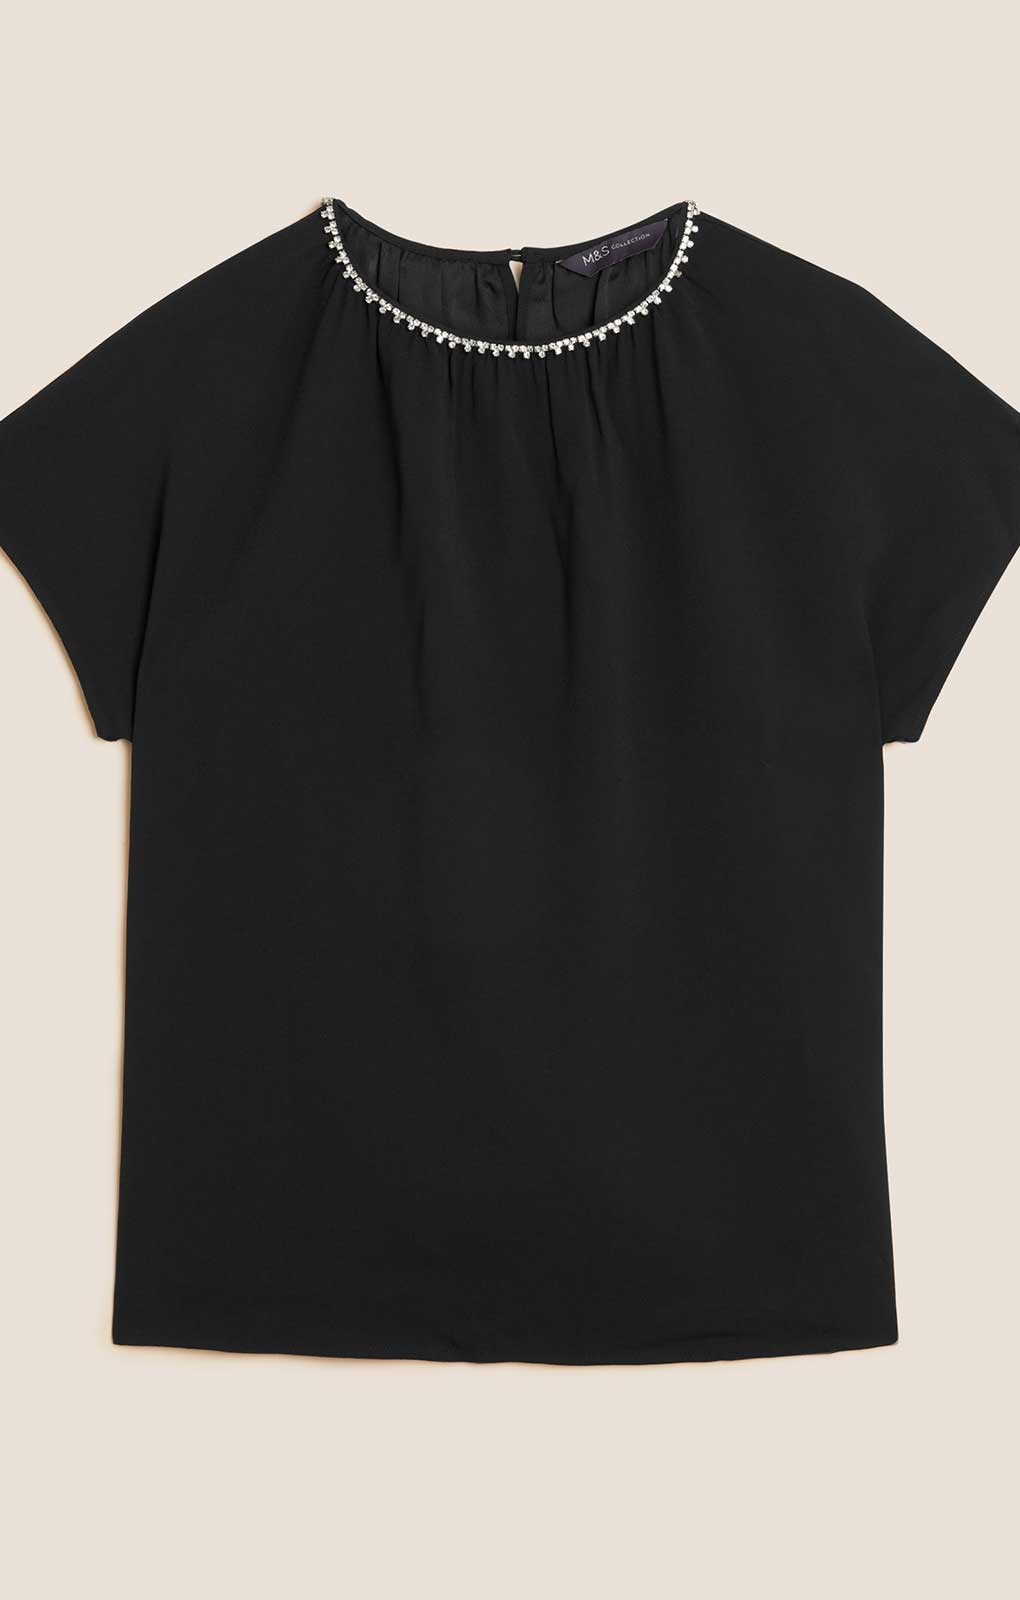 M&S Black Embellished Round Neck Short Sleeve Top product image